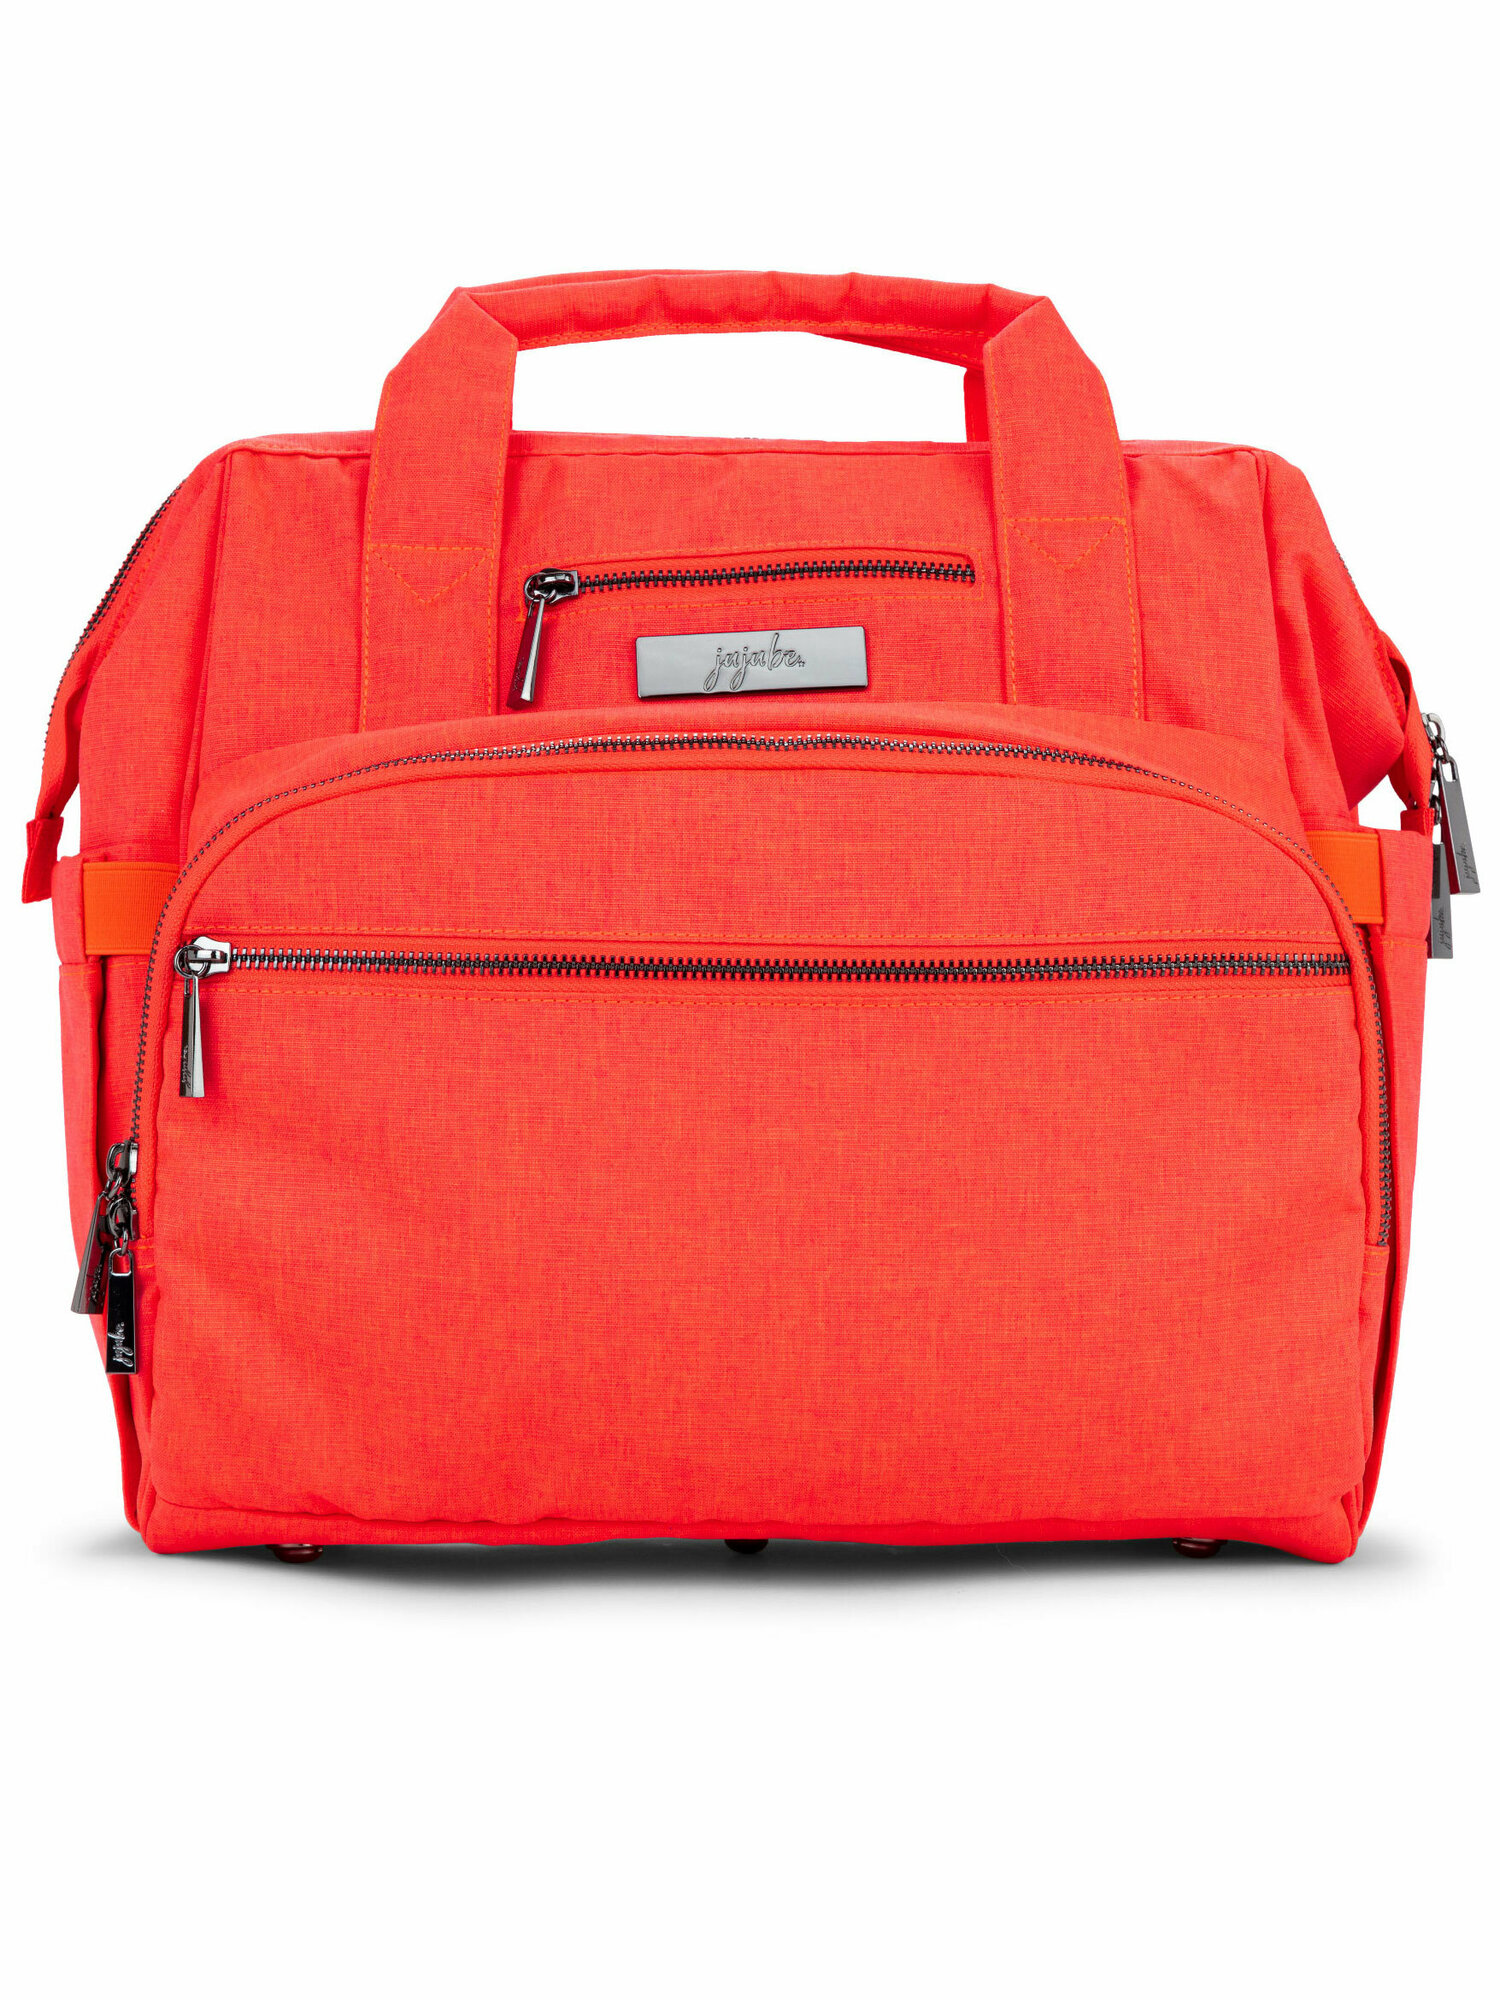 JuJuBe (США) Сумка рюкзак для коляски Dr. B.F.F Неоновая Коралловая - Neon Coral